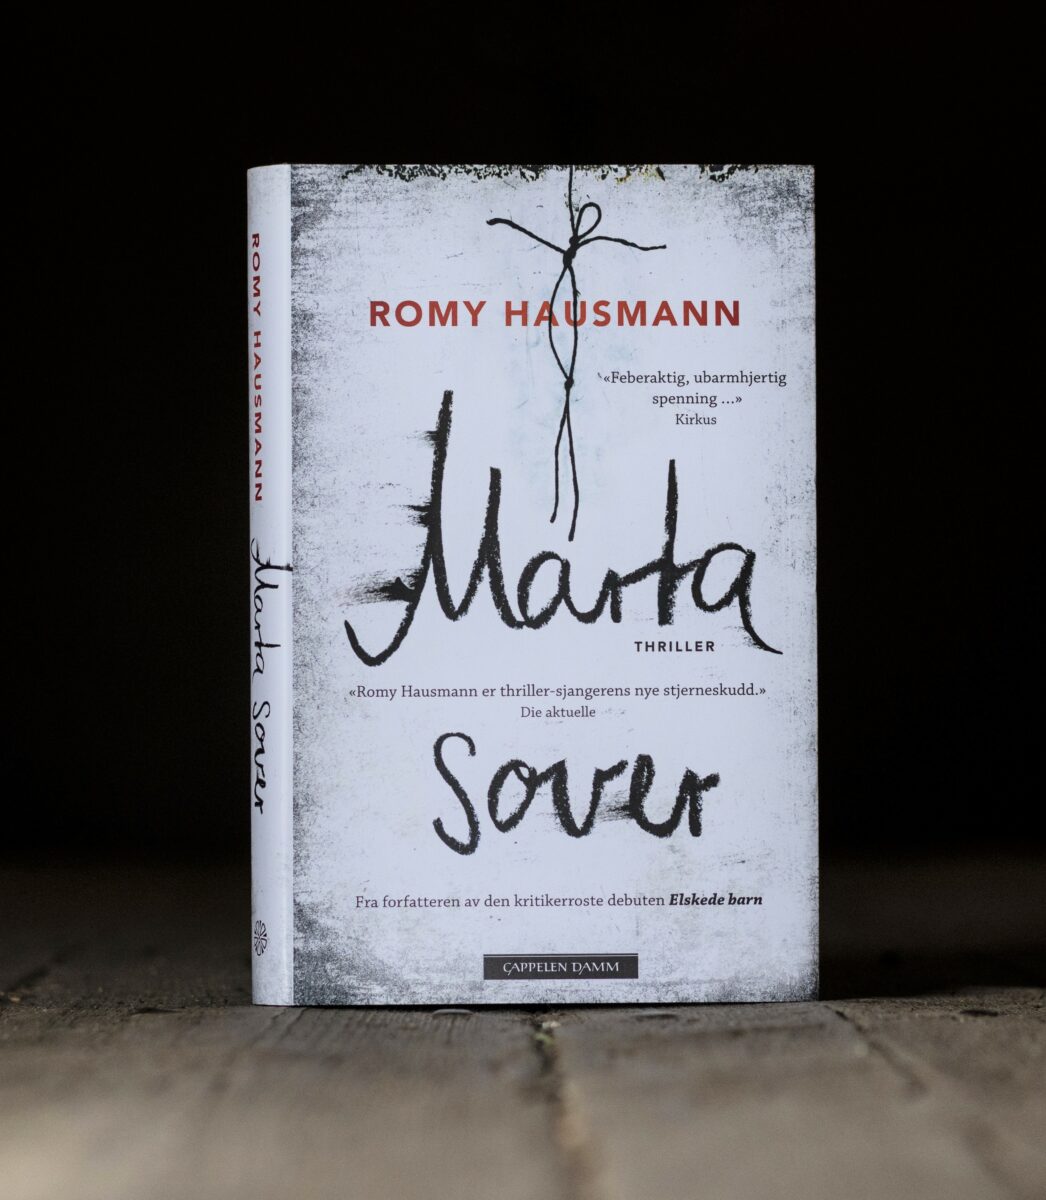 Foto av boka "Marta sover" av Romy Hausmann